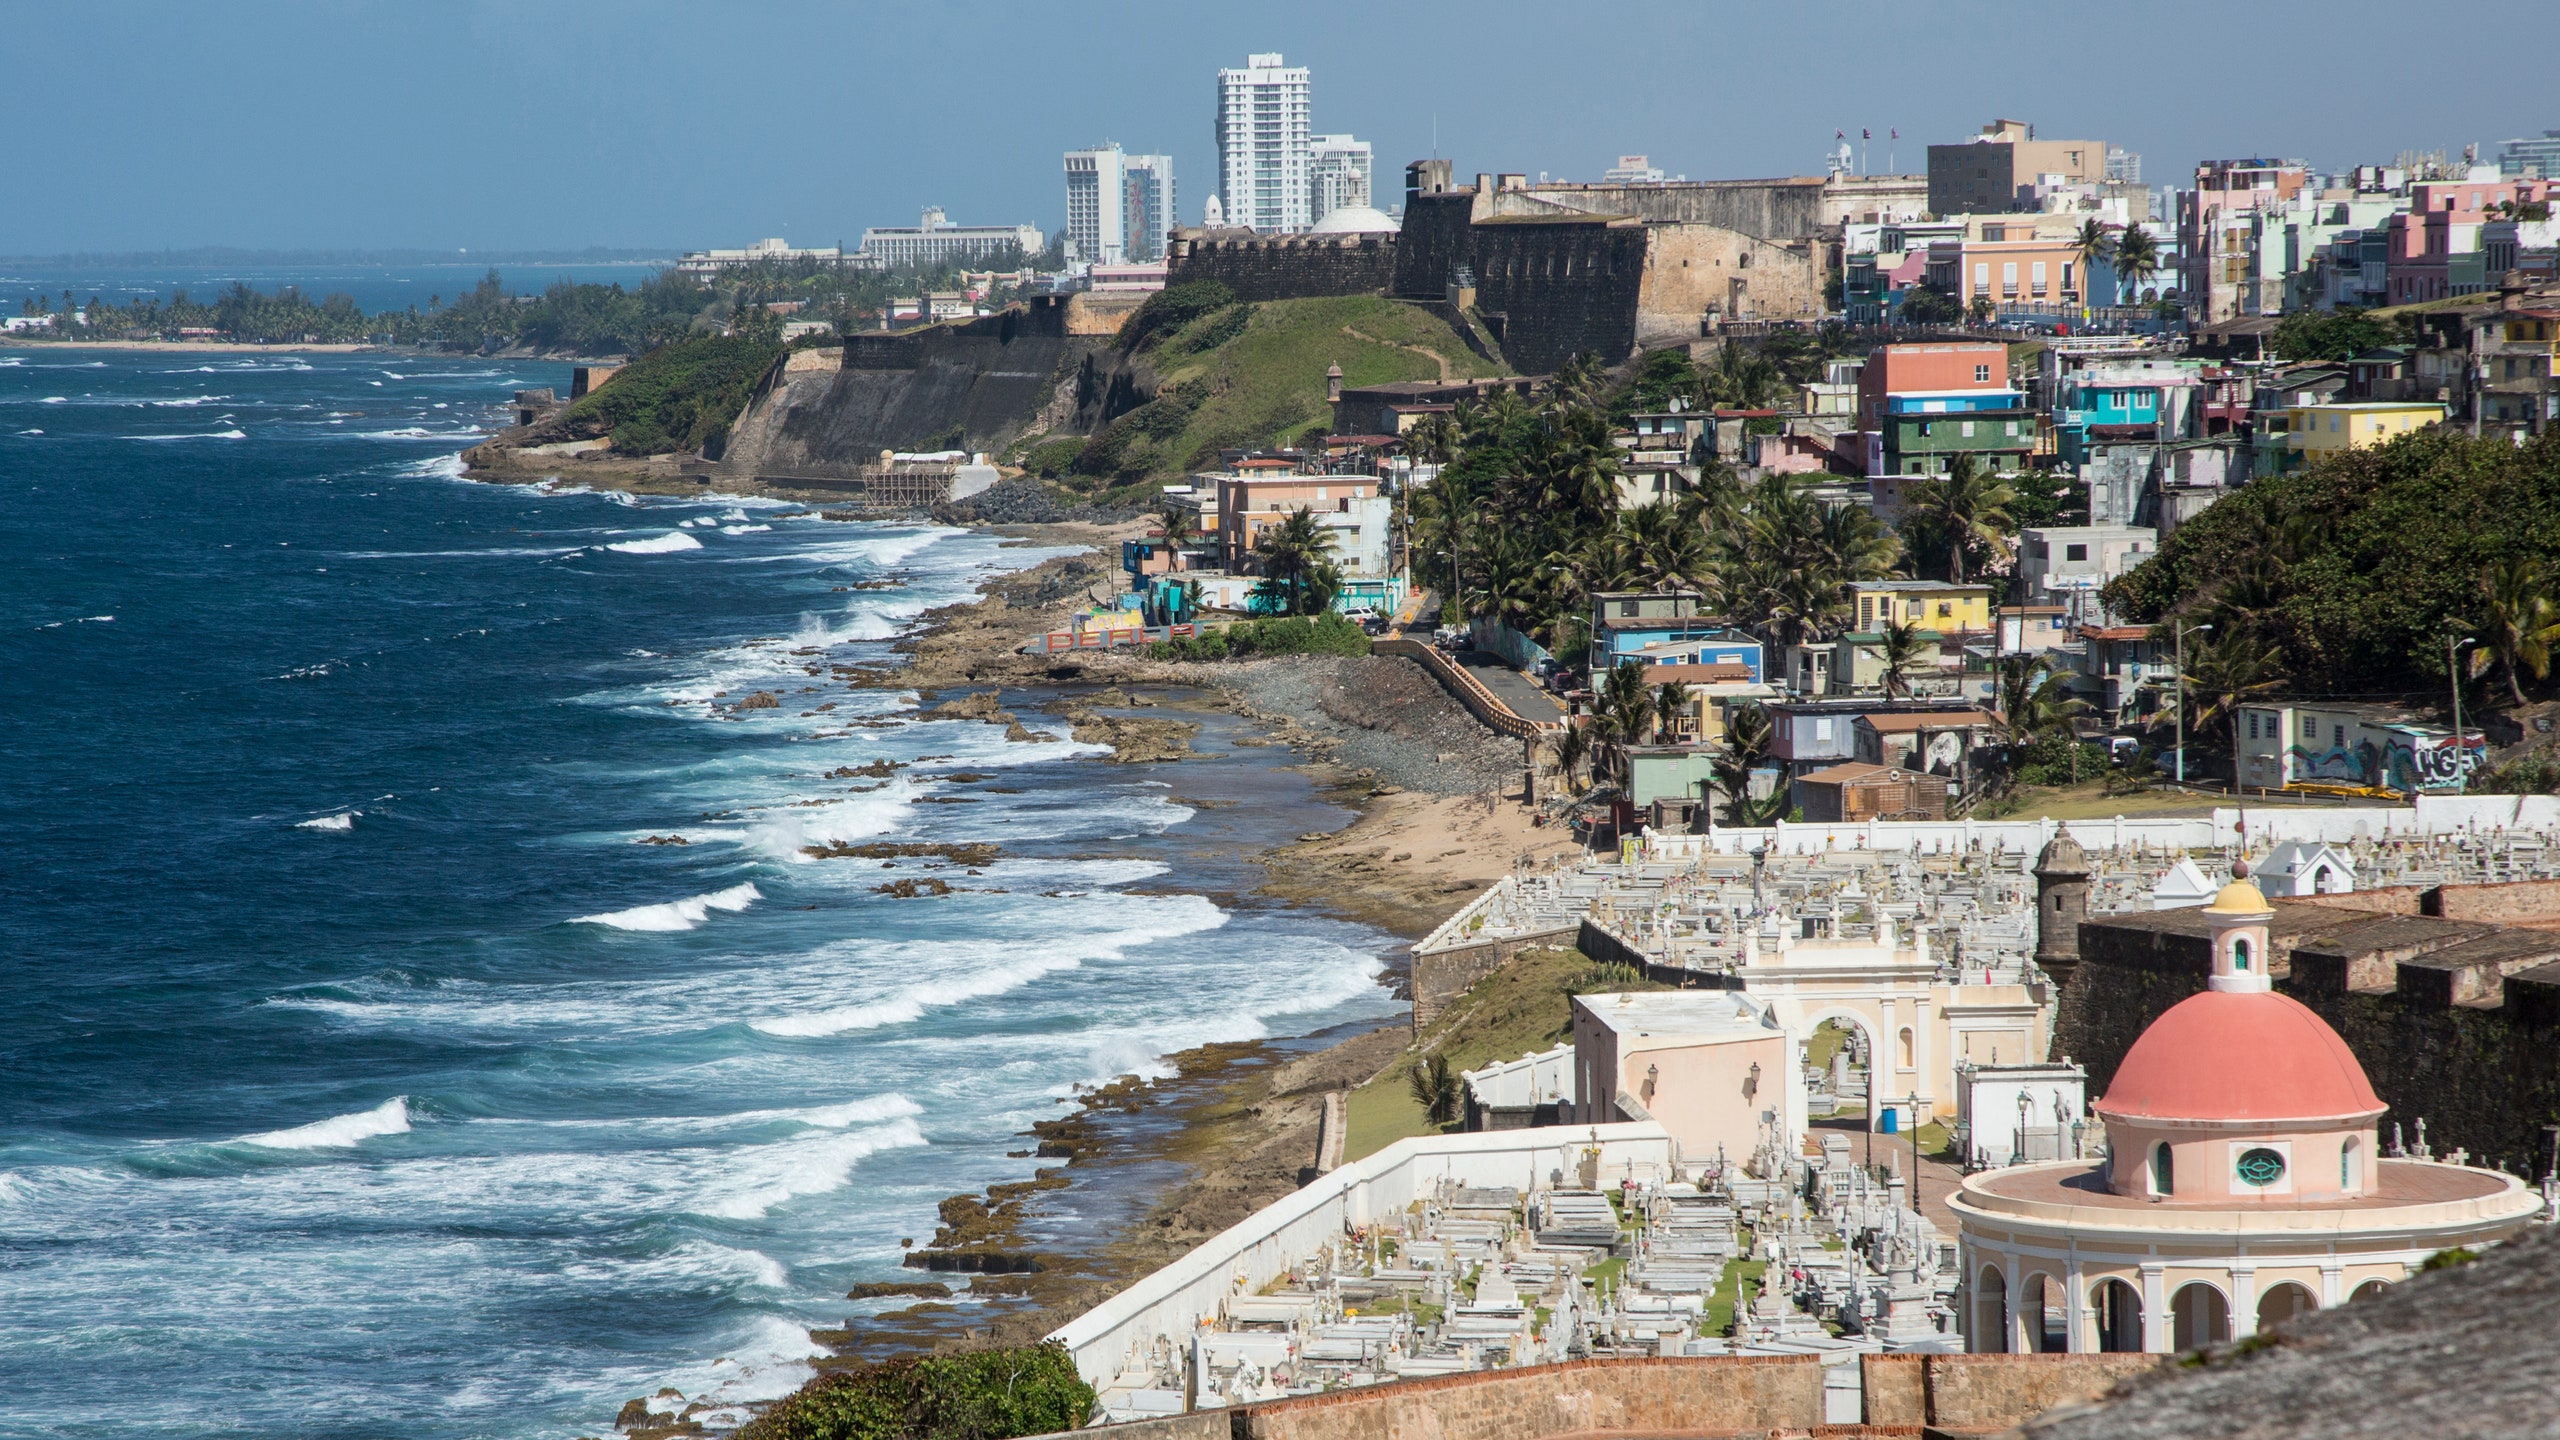 Flight Deal: San Juan, Puerto Rico From $155 Round Trip. Condé Nast Traveler